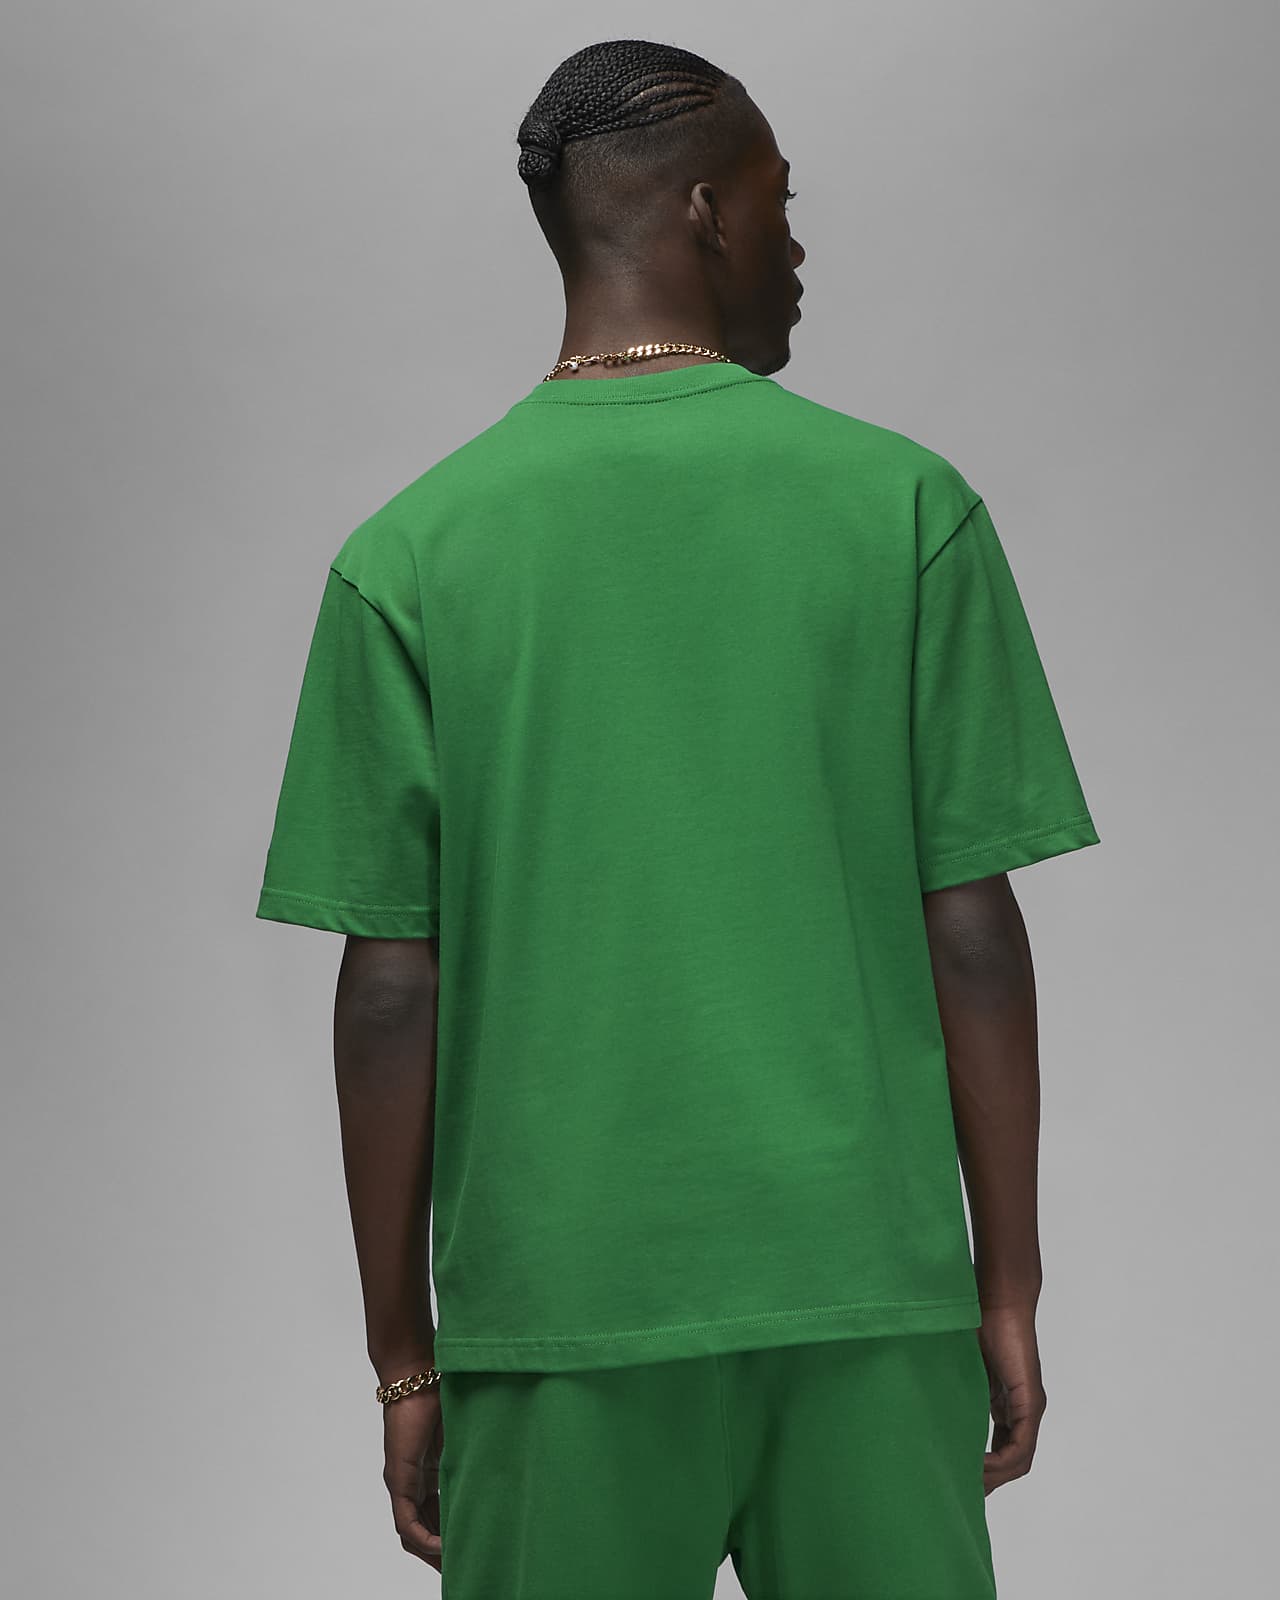 green and orange jordan shirt